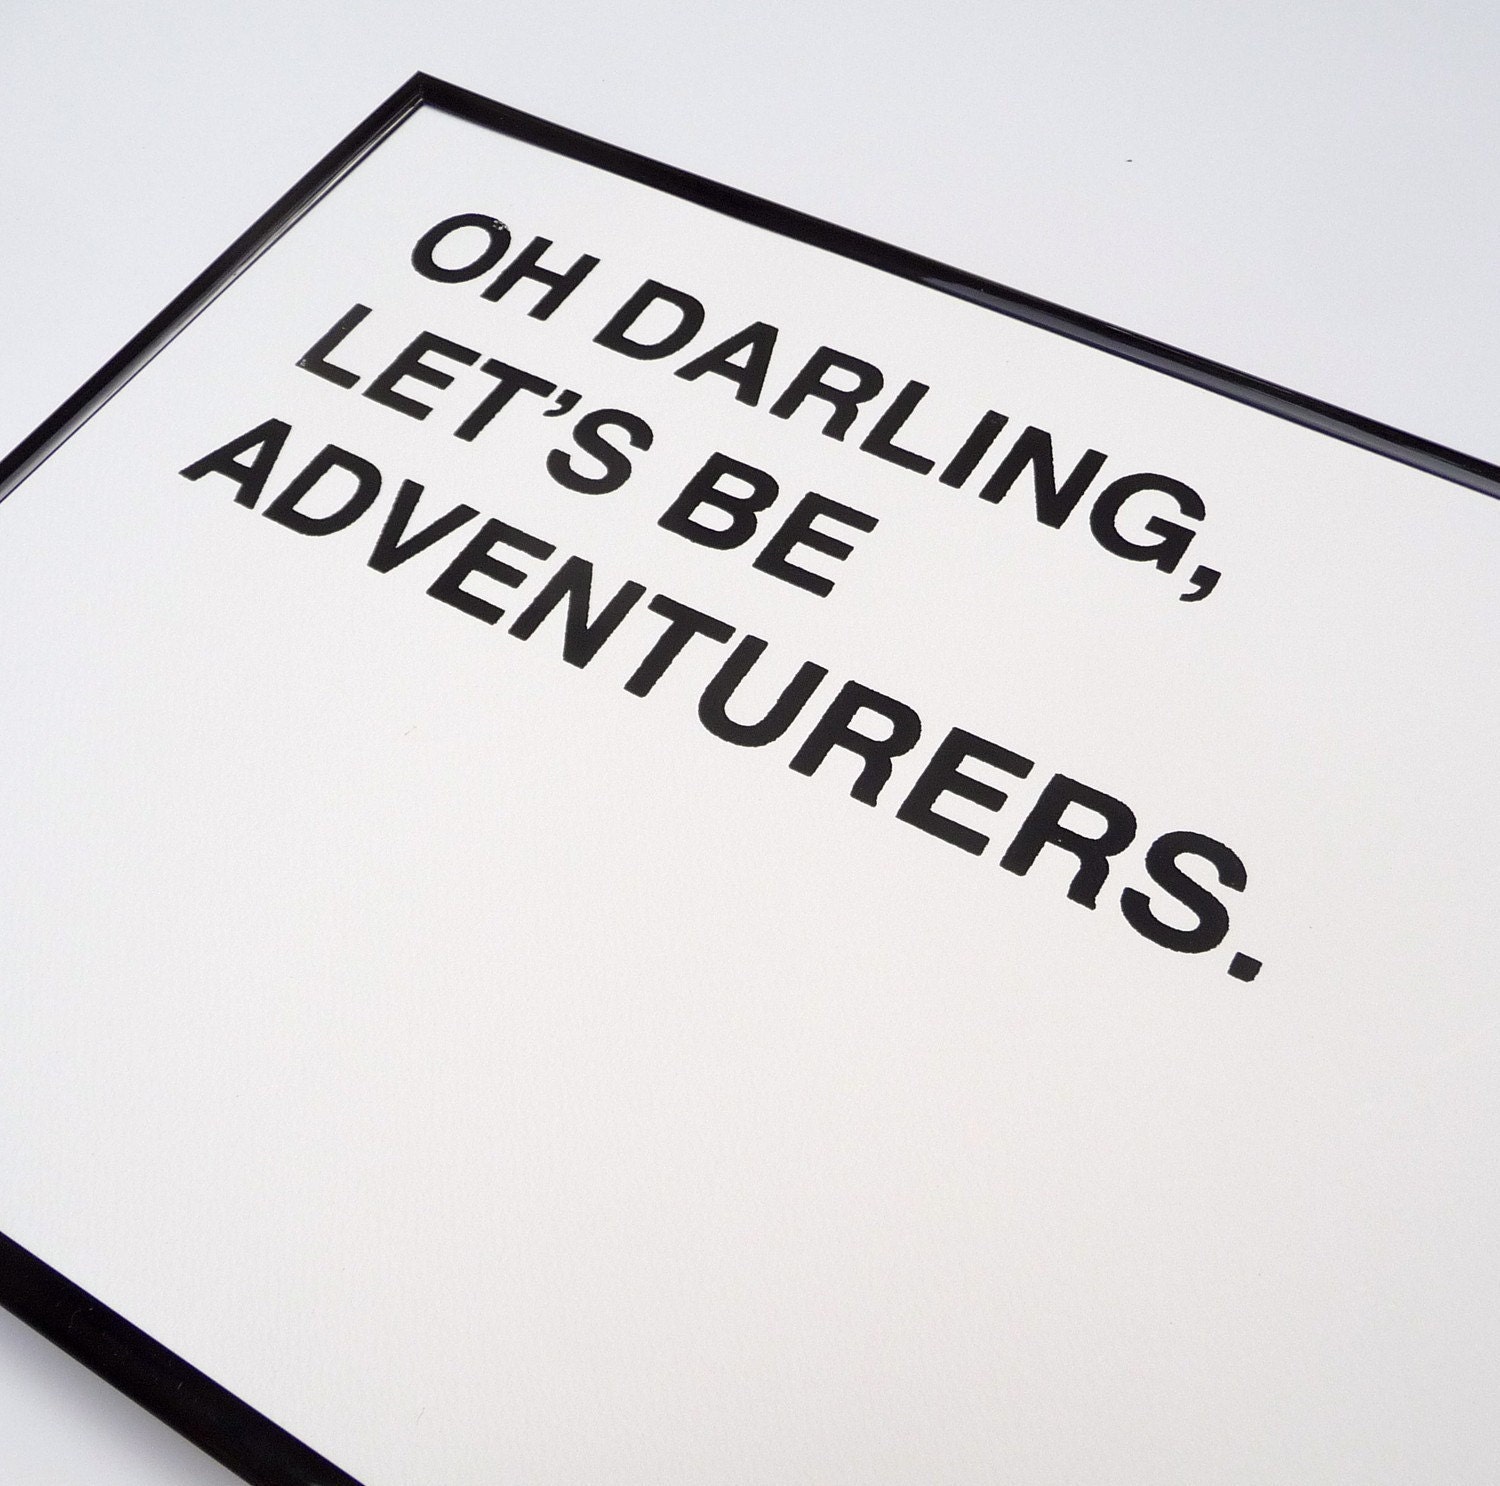 oh darling, let's be adventurers screenprinted poster - black